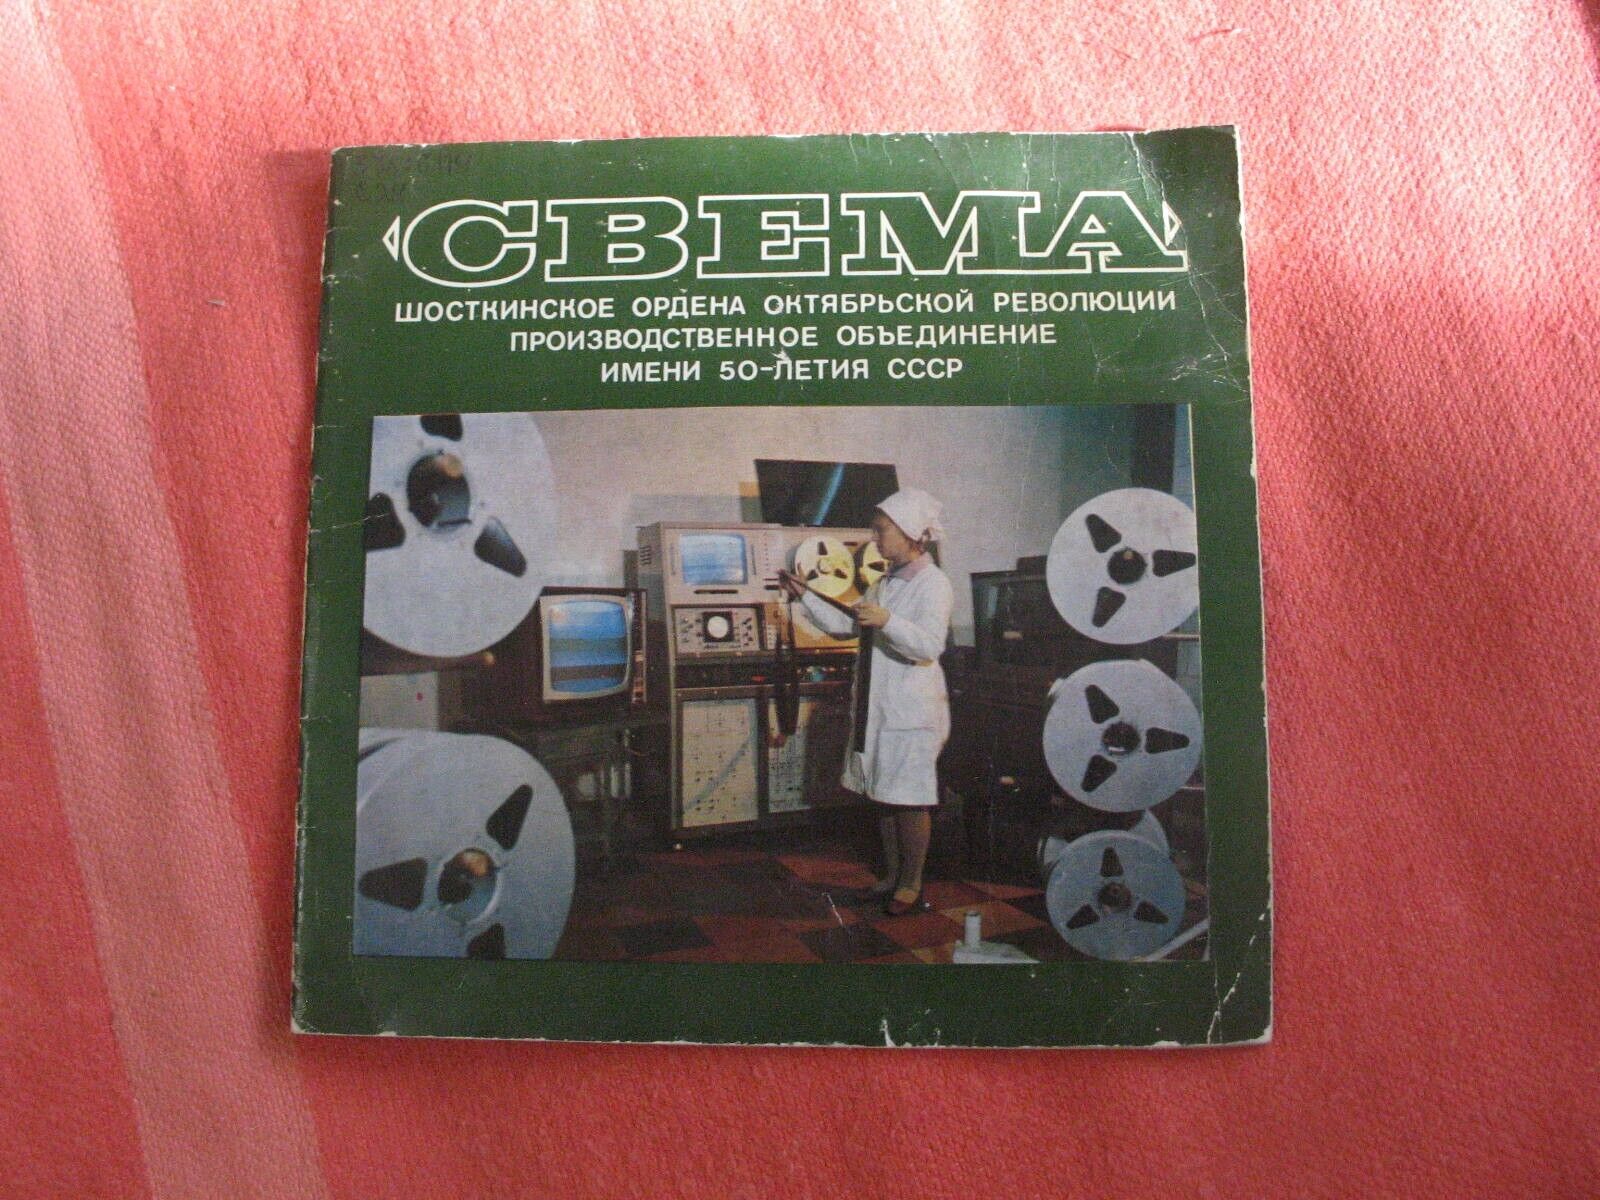 SVEMA factory camera roll for film and tape promo brochure USSR 1978 Ukraine